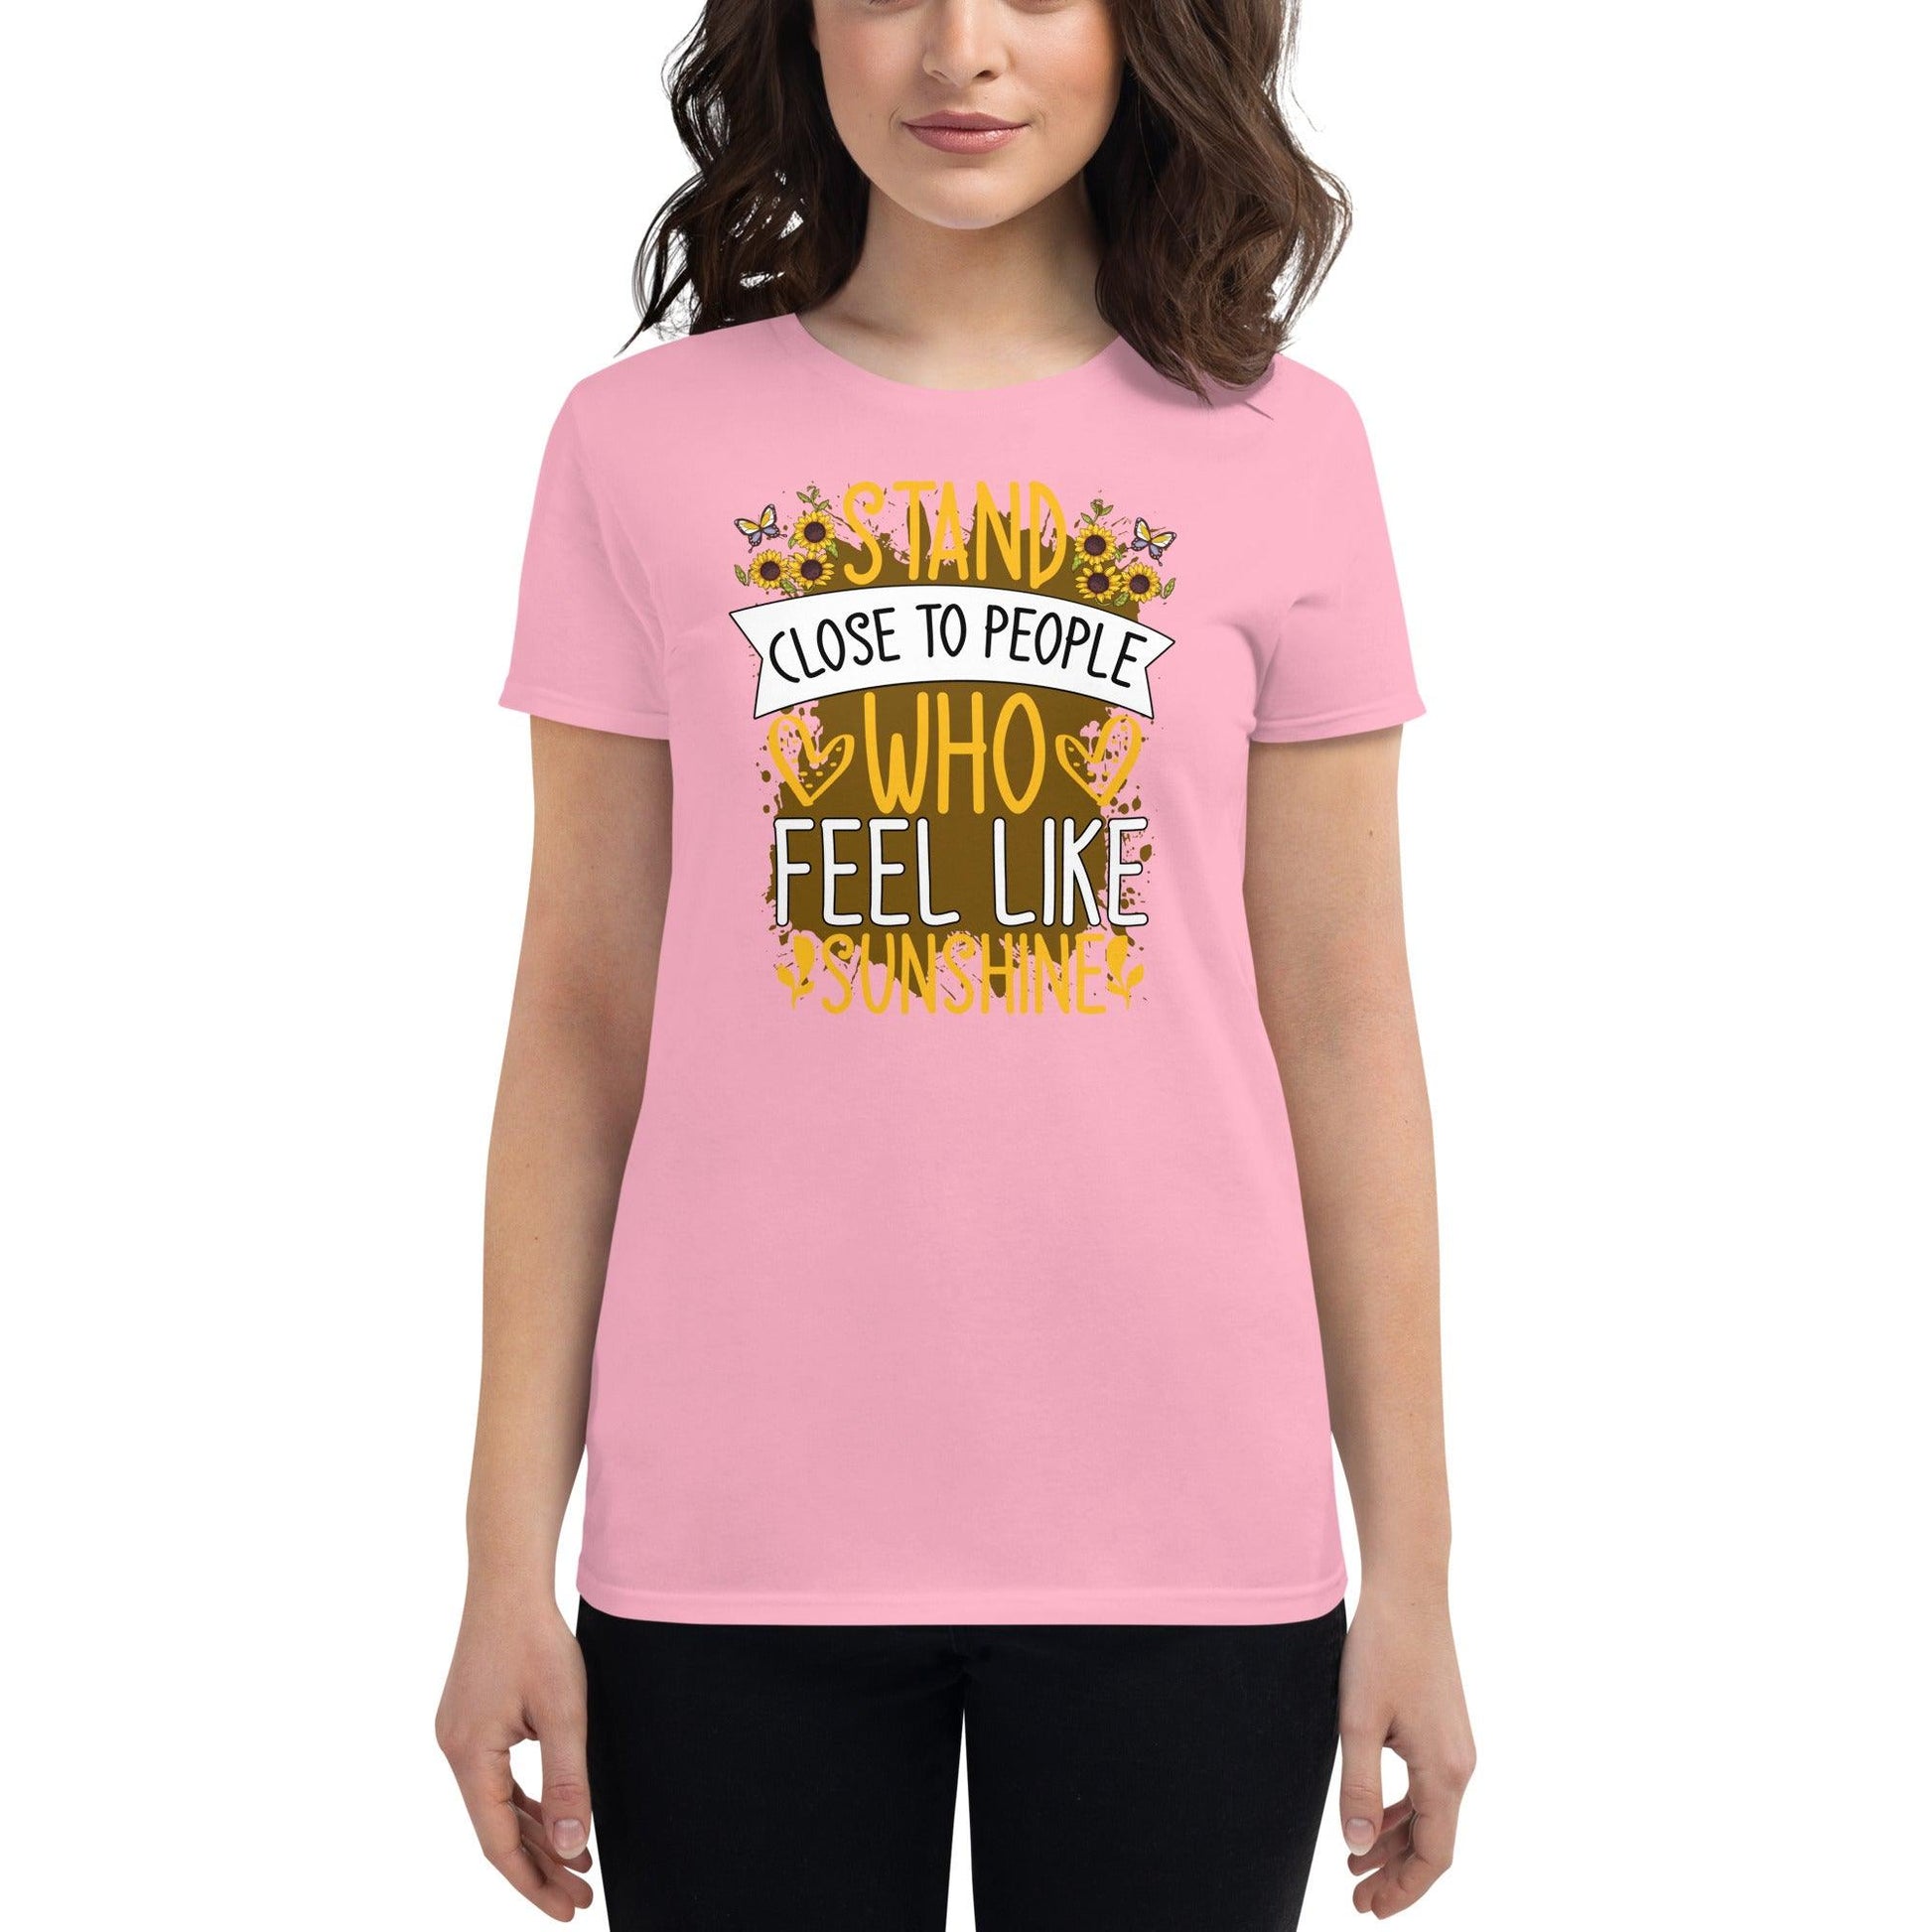 People Like Sunshine T-shirt - L & M Kee, LLC